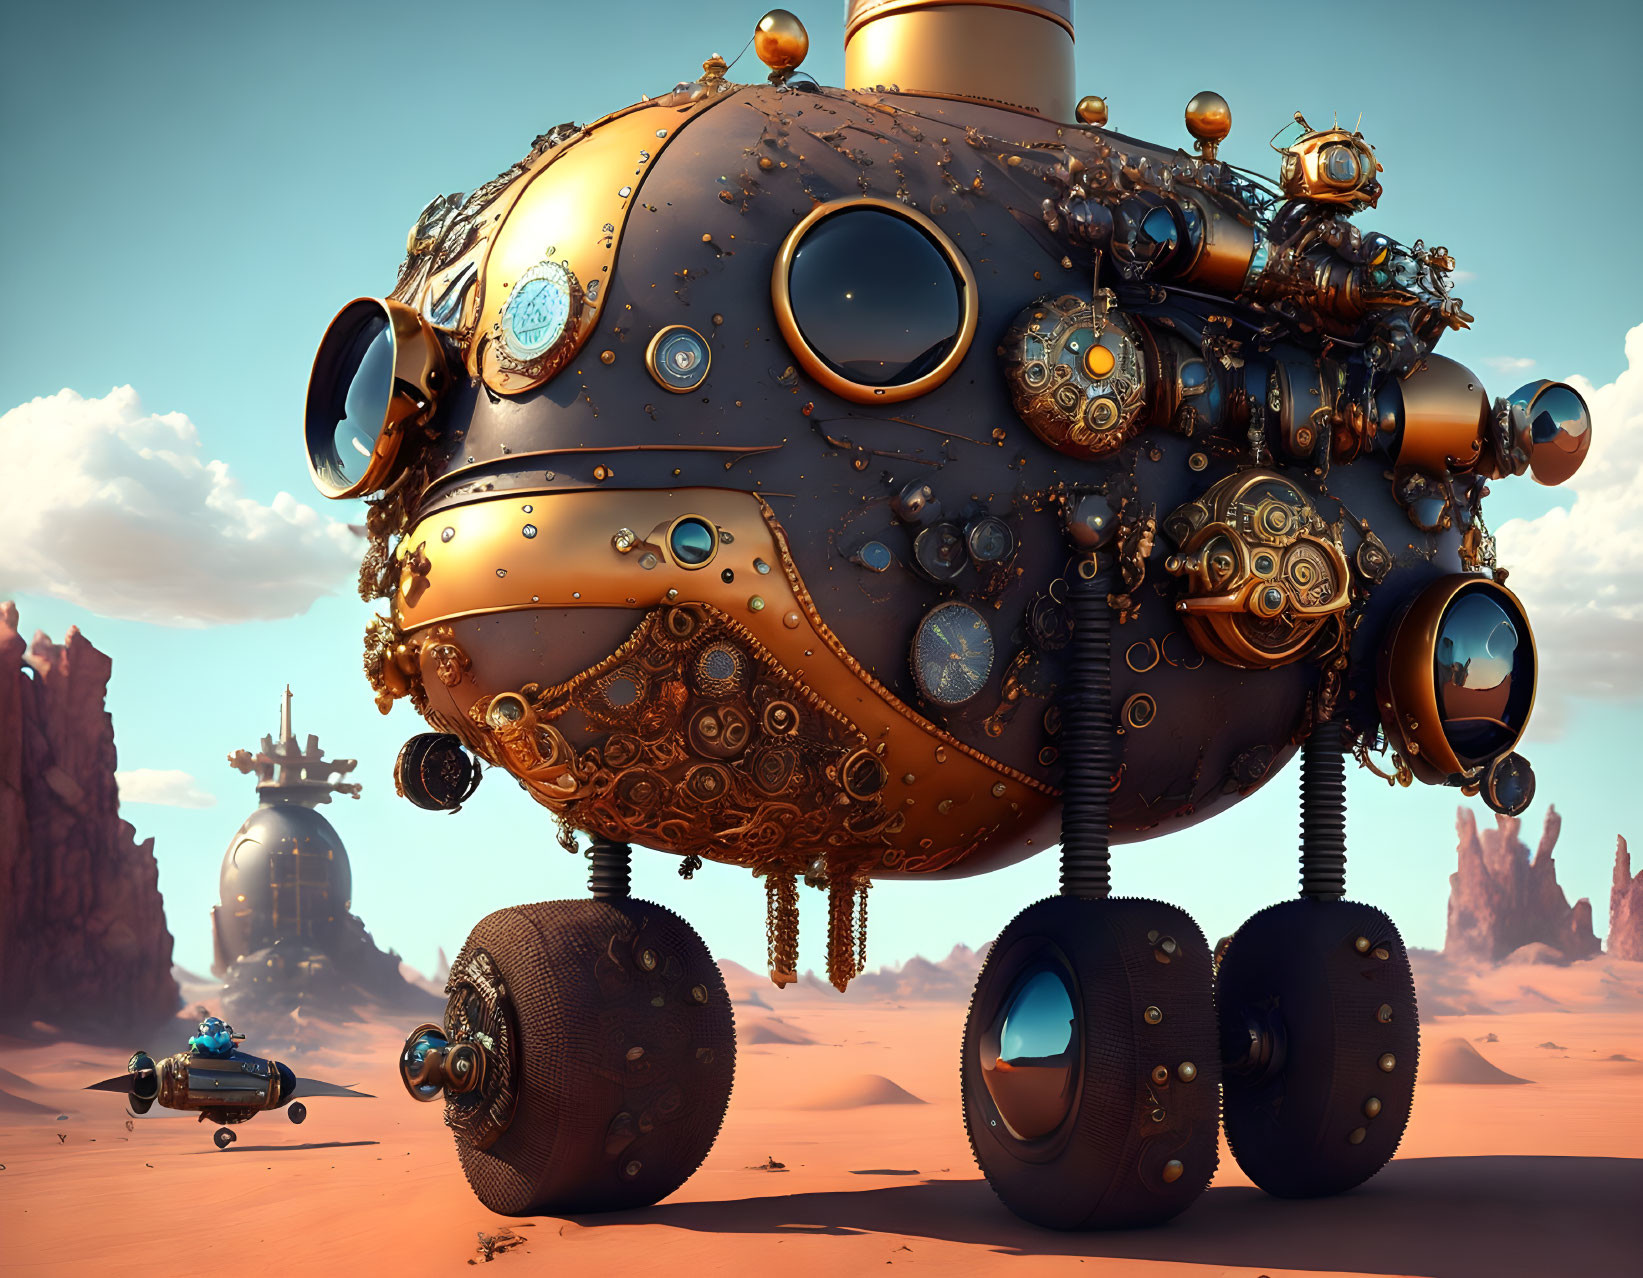 Steampunk-style vehicle with intricate metallic details in barren desert landscape